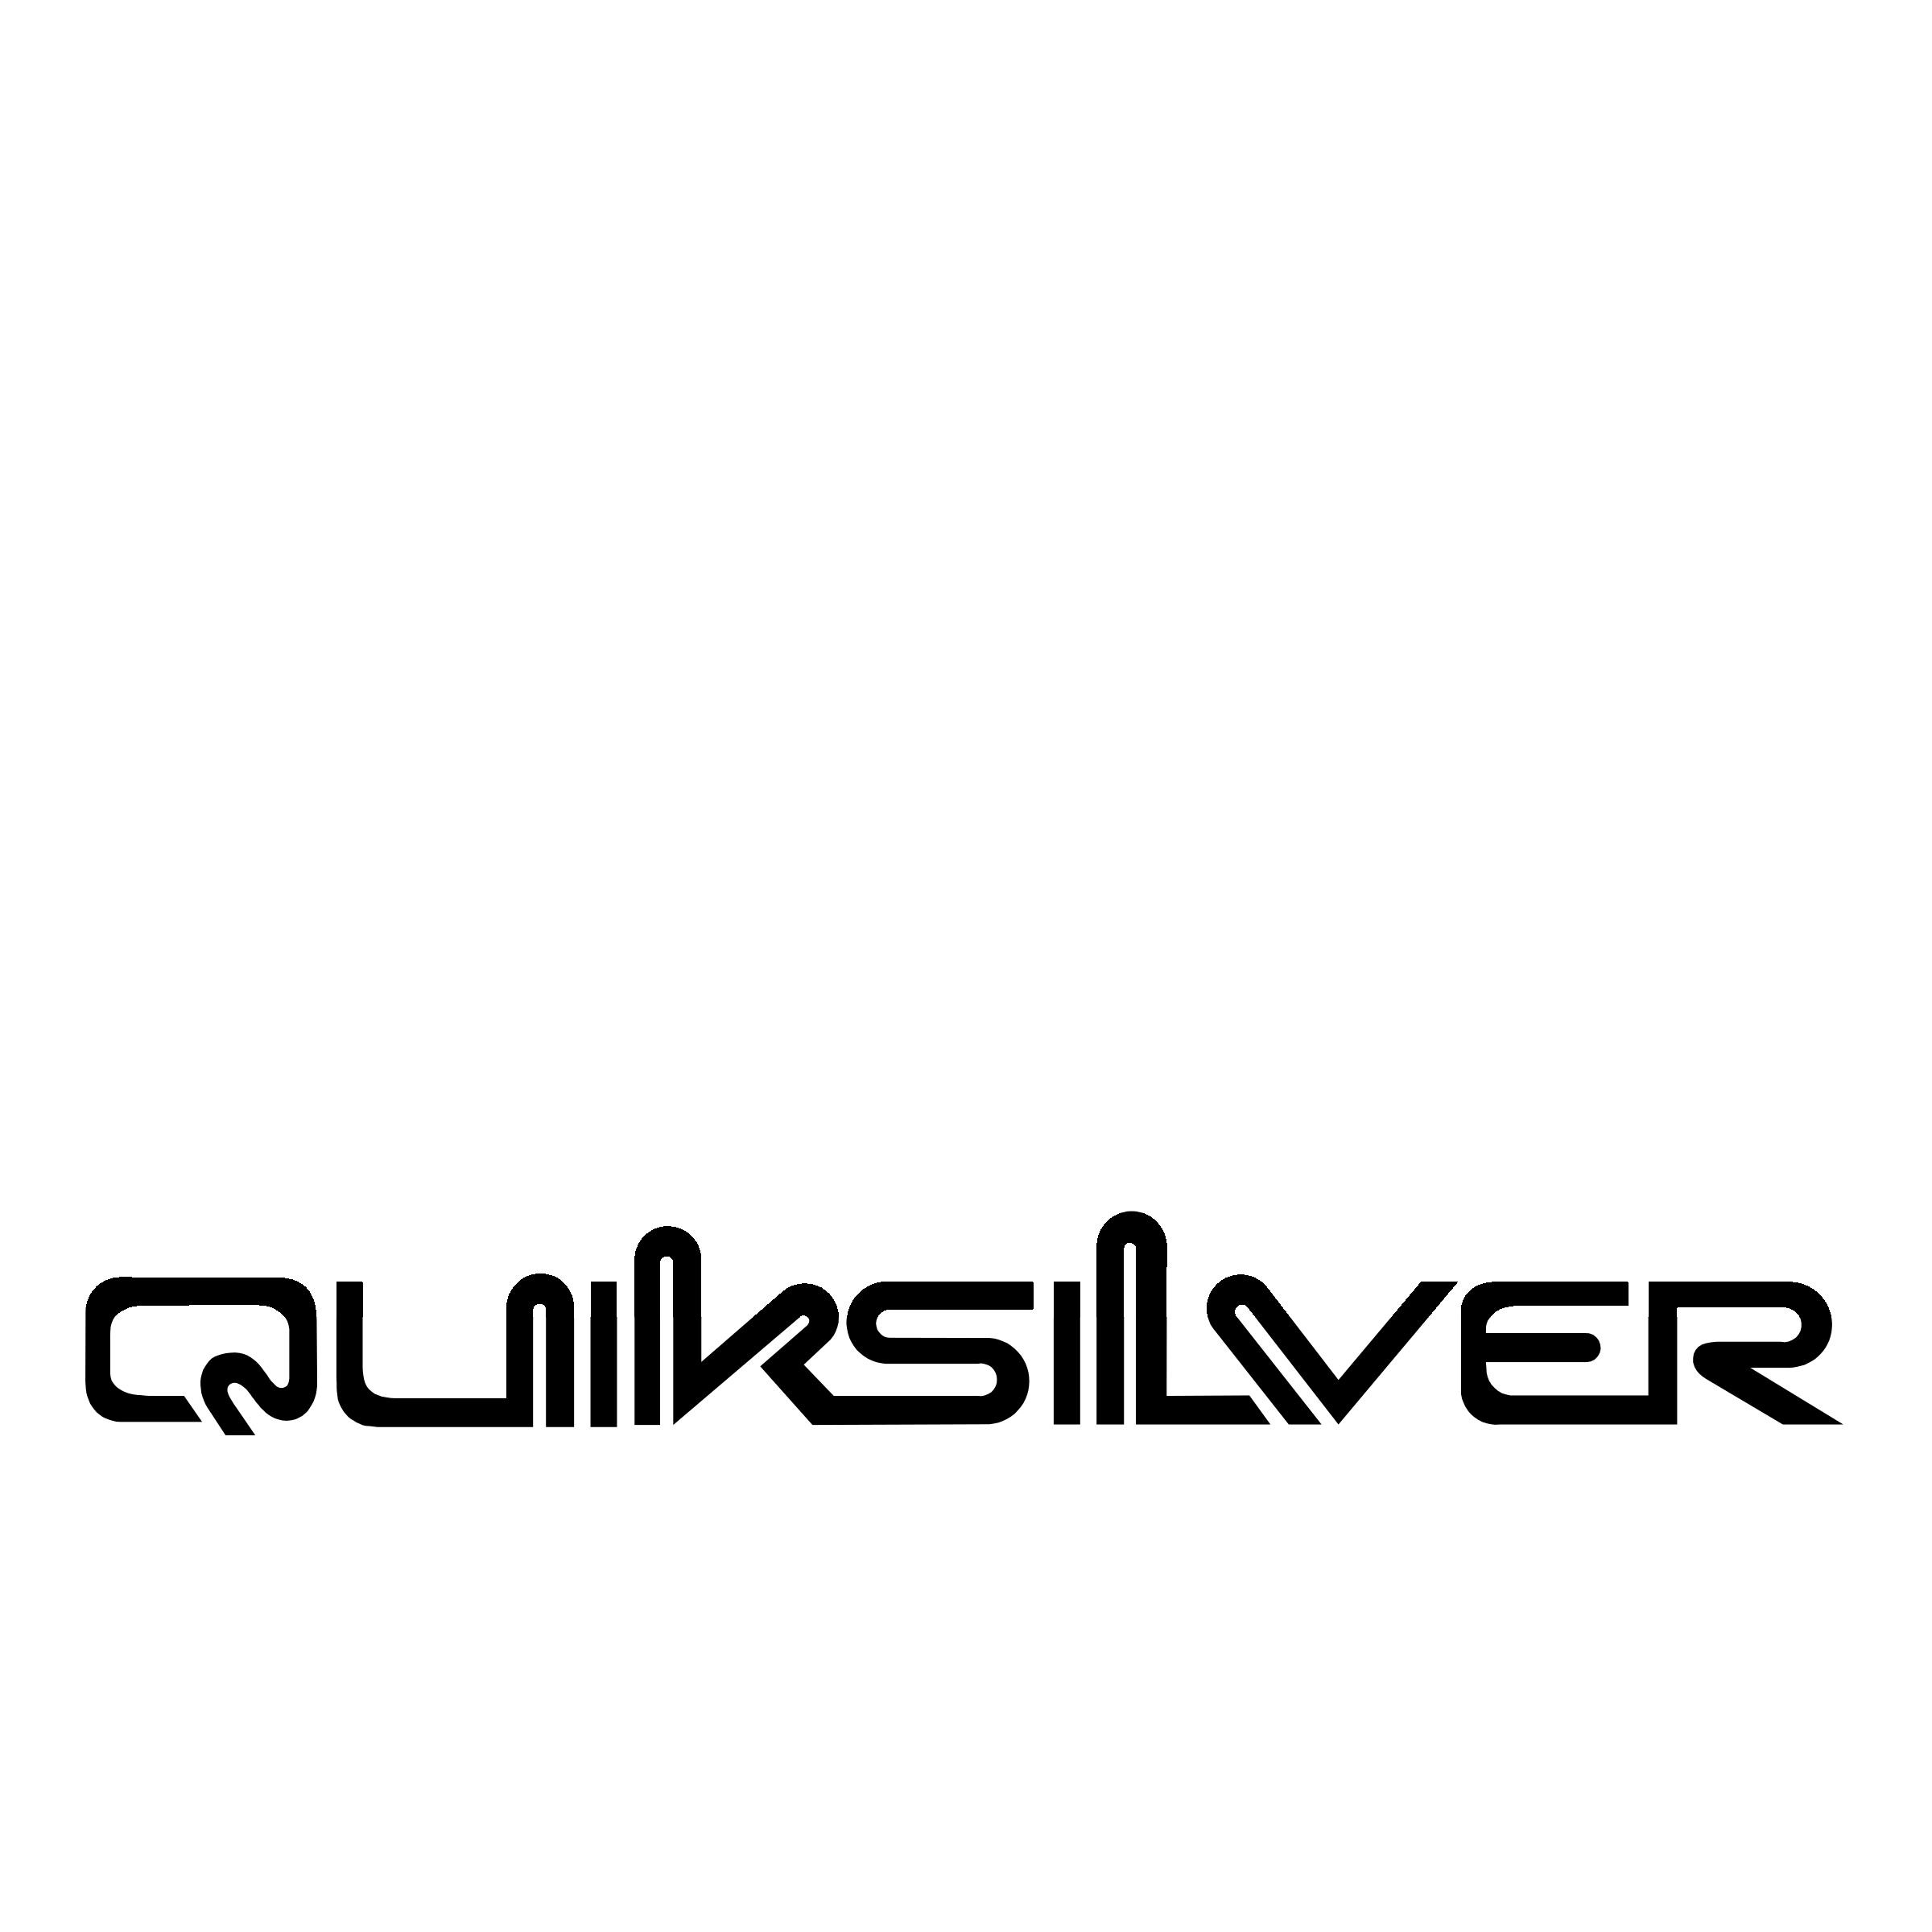 Black Quiksilver Logo - Quiksilver Logo PNG Transparent & SVG Vector - Freebie Supply